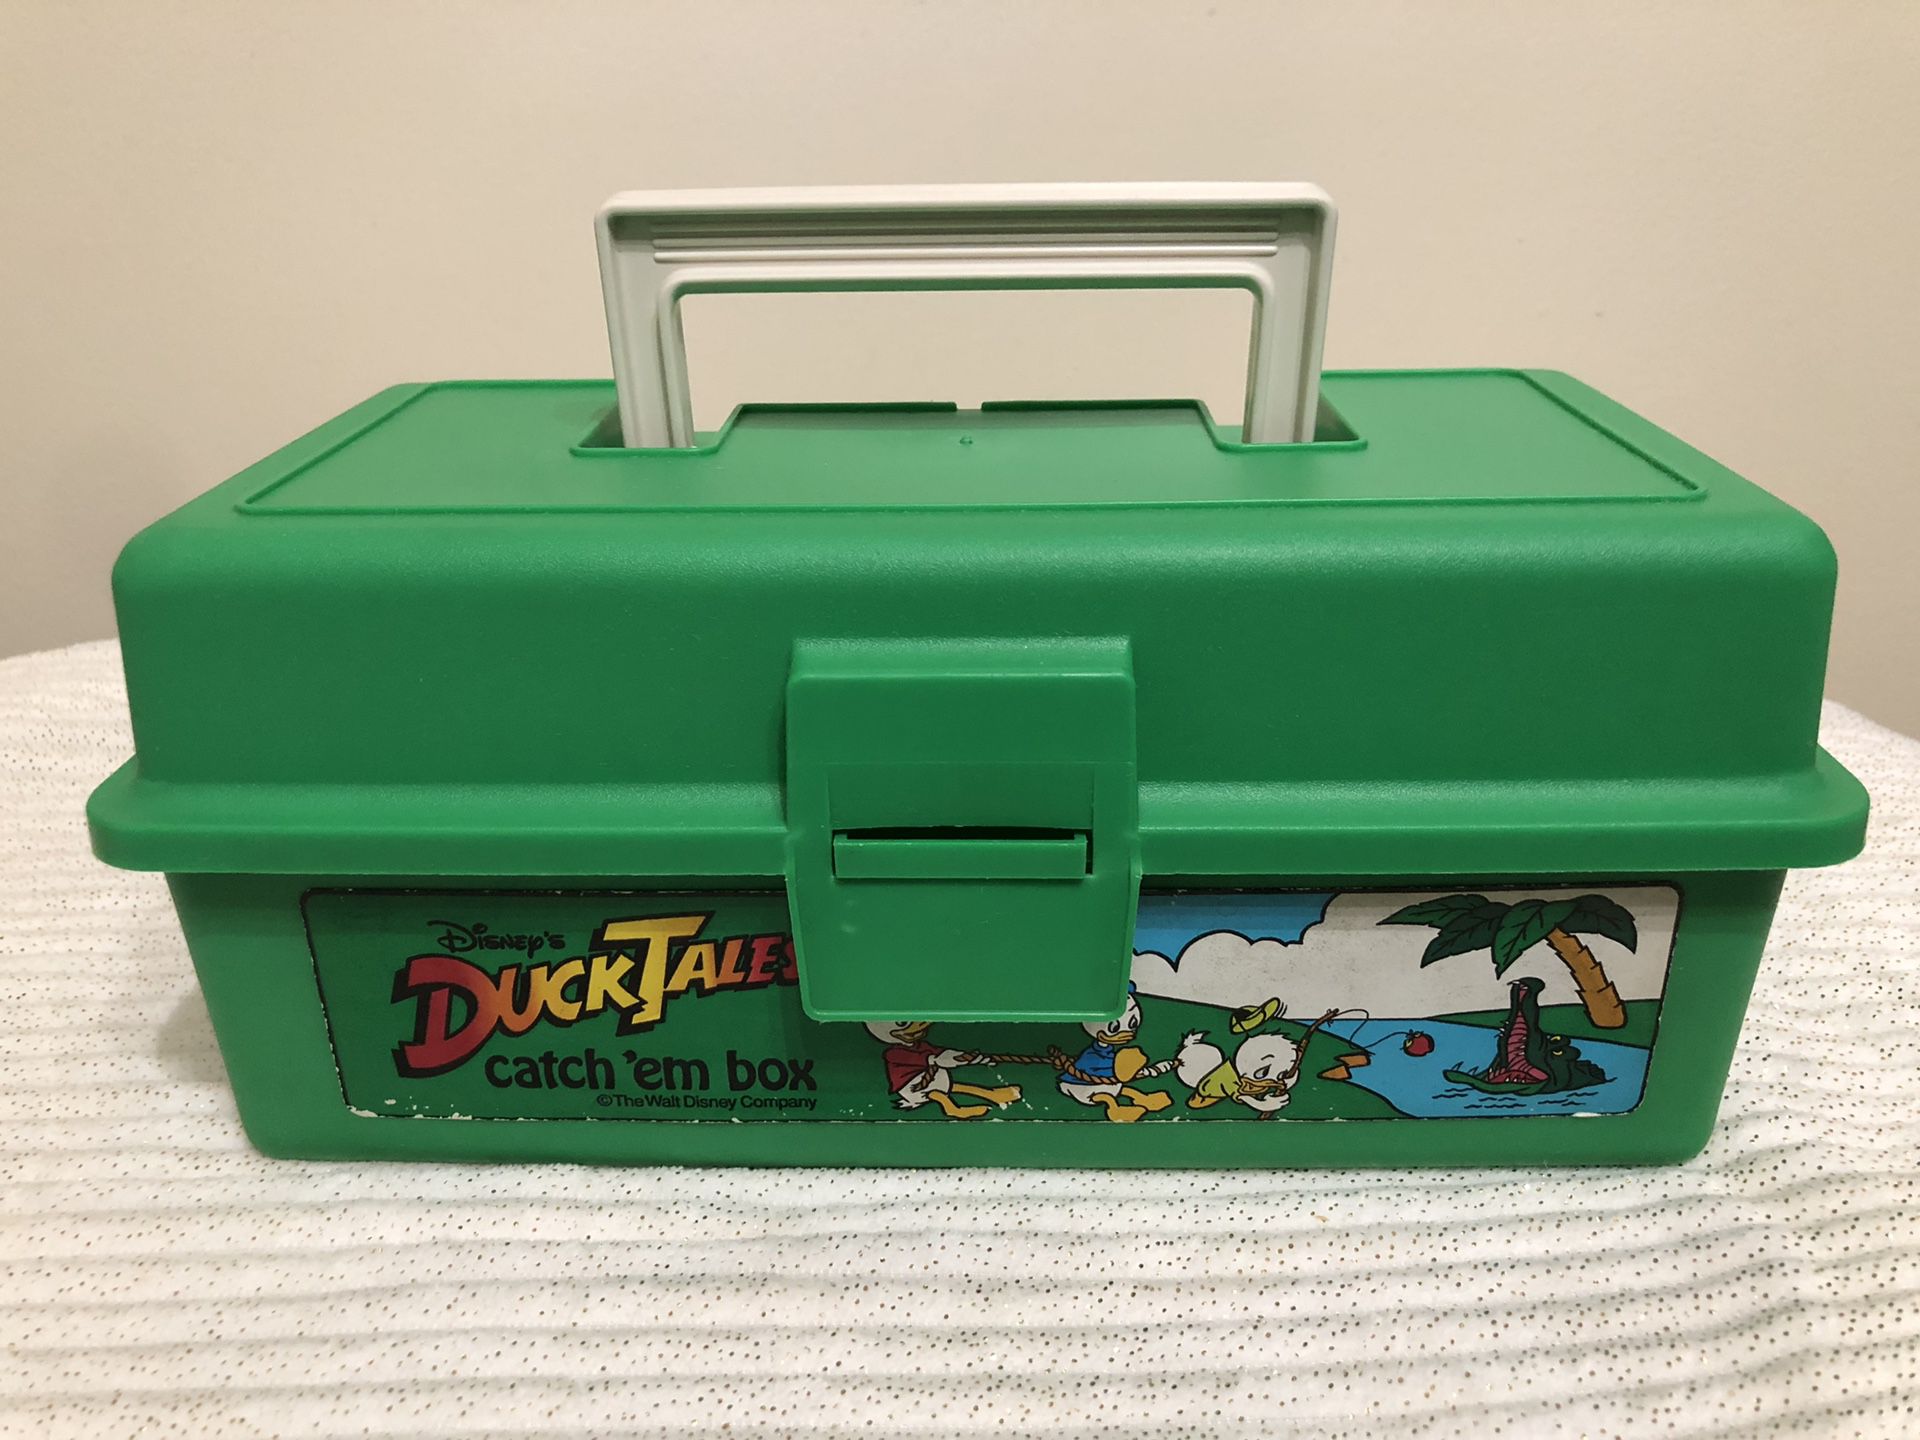 Vintage Woodstream plastic Disney’s Duck Tales Catch’em box Tackle box